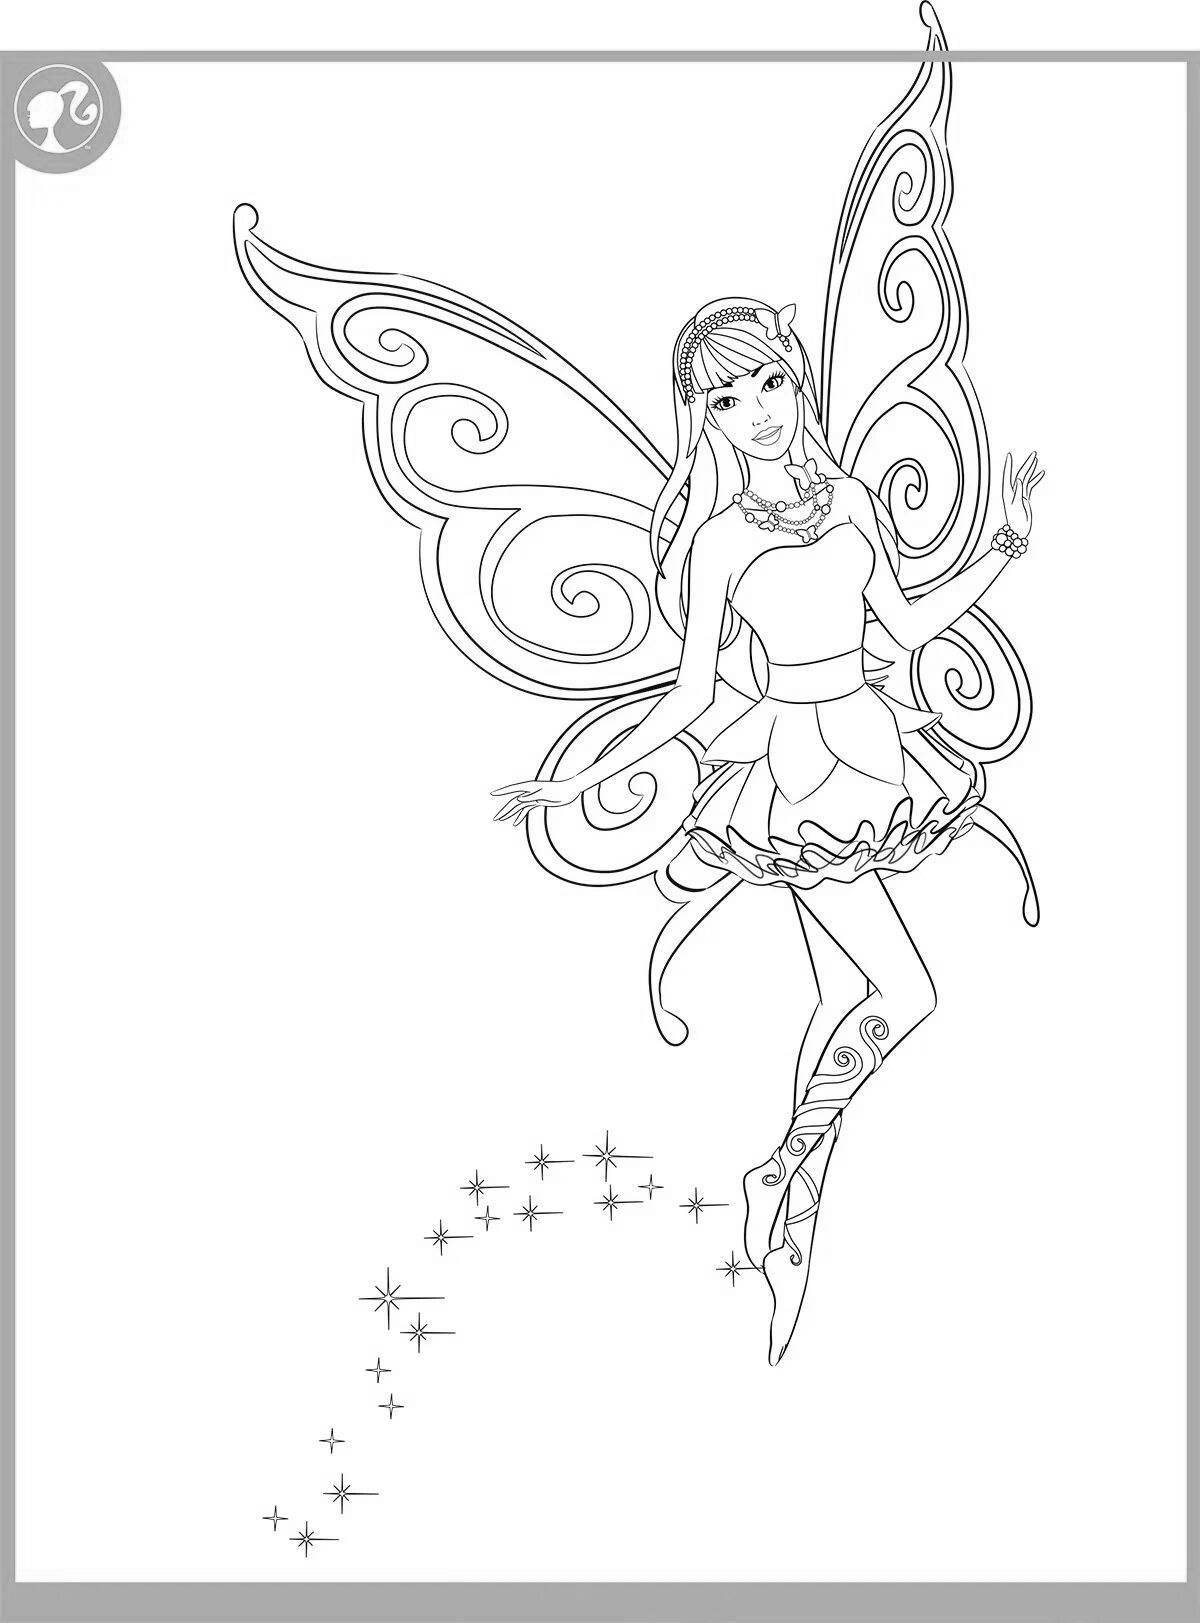 Mystical fairy barbie coloring book